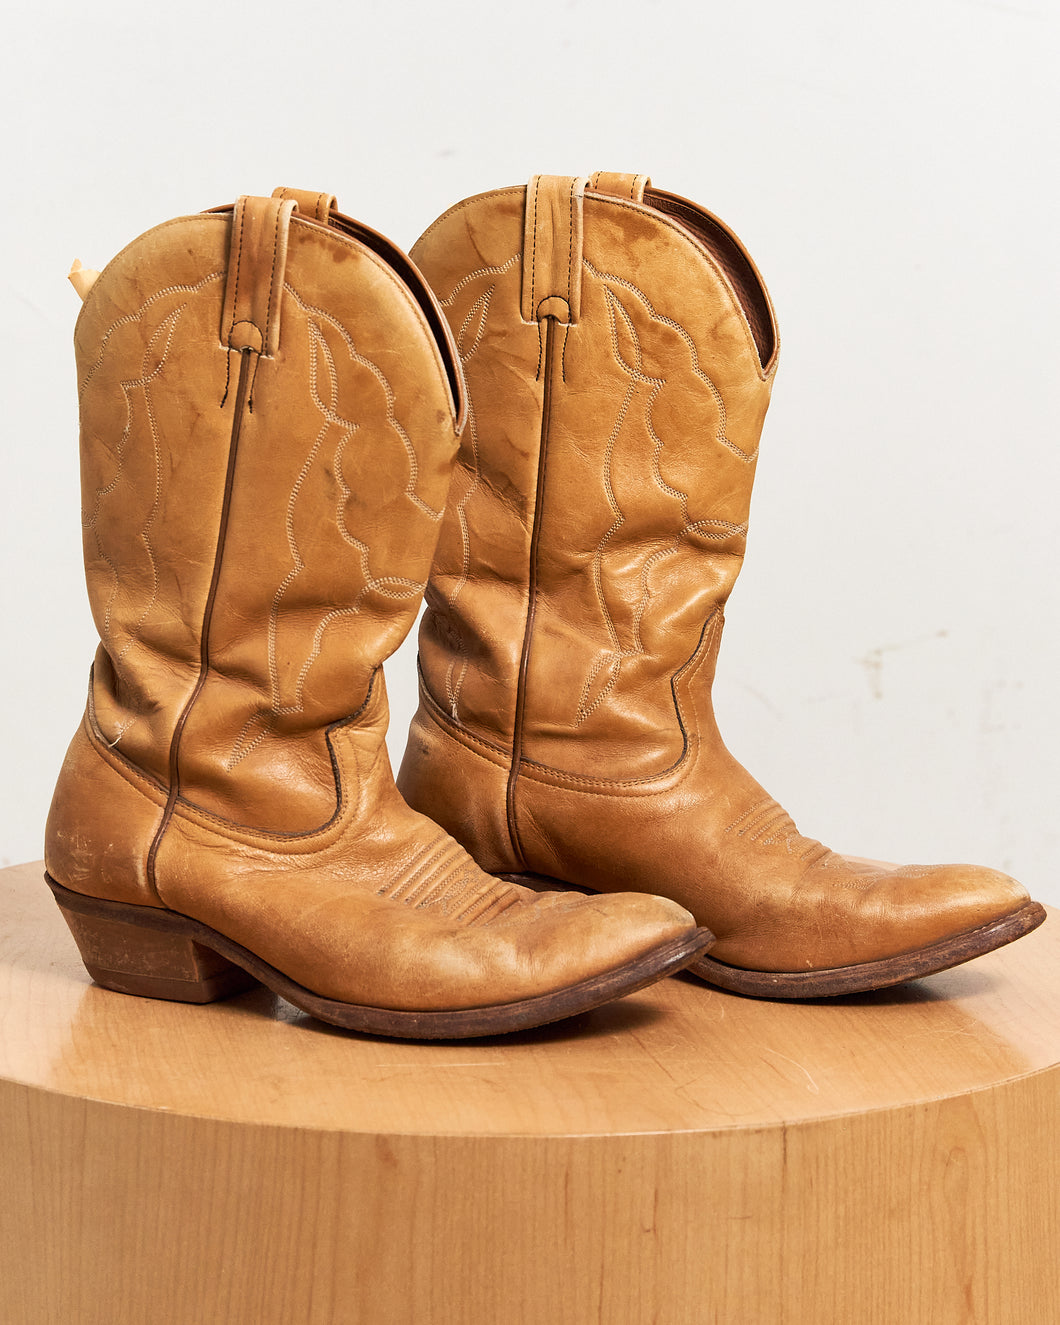 Cowboy Boots - Tall Light Tan Size 9.